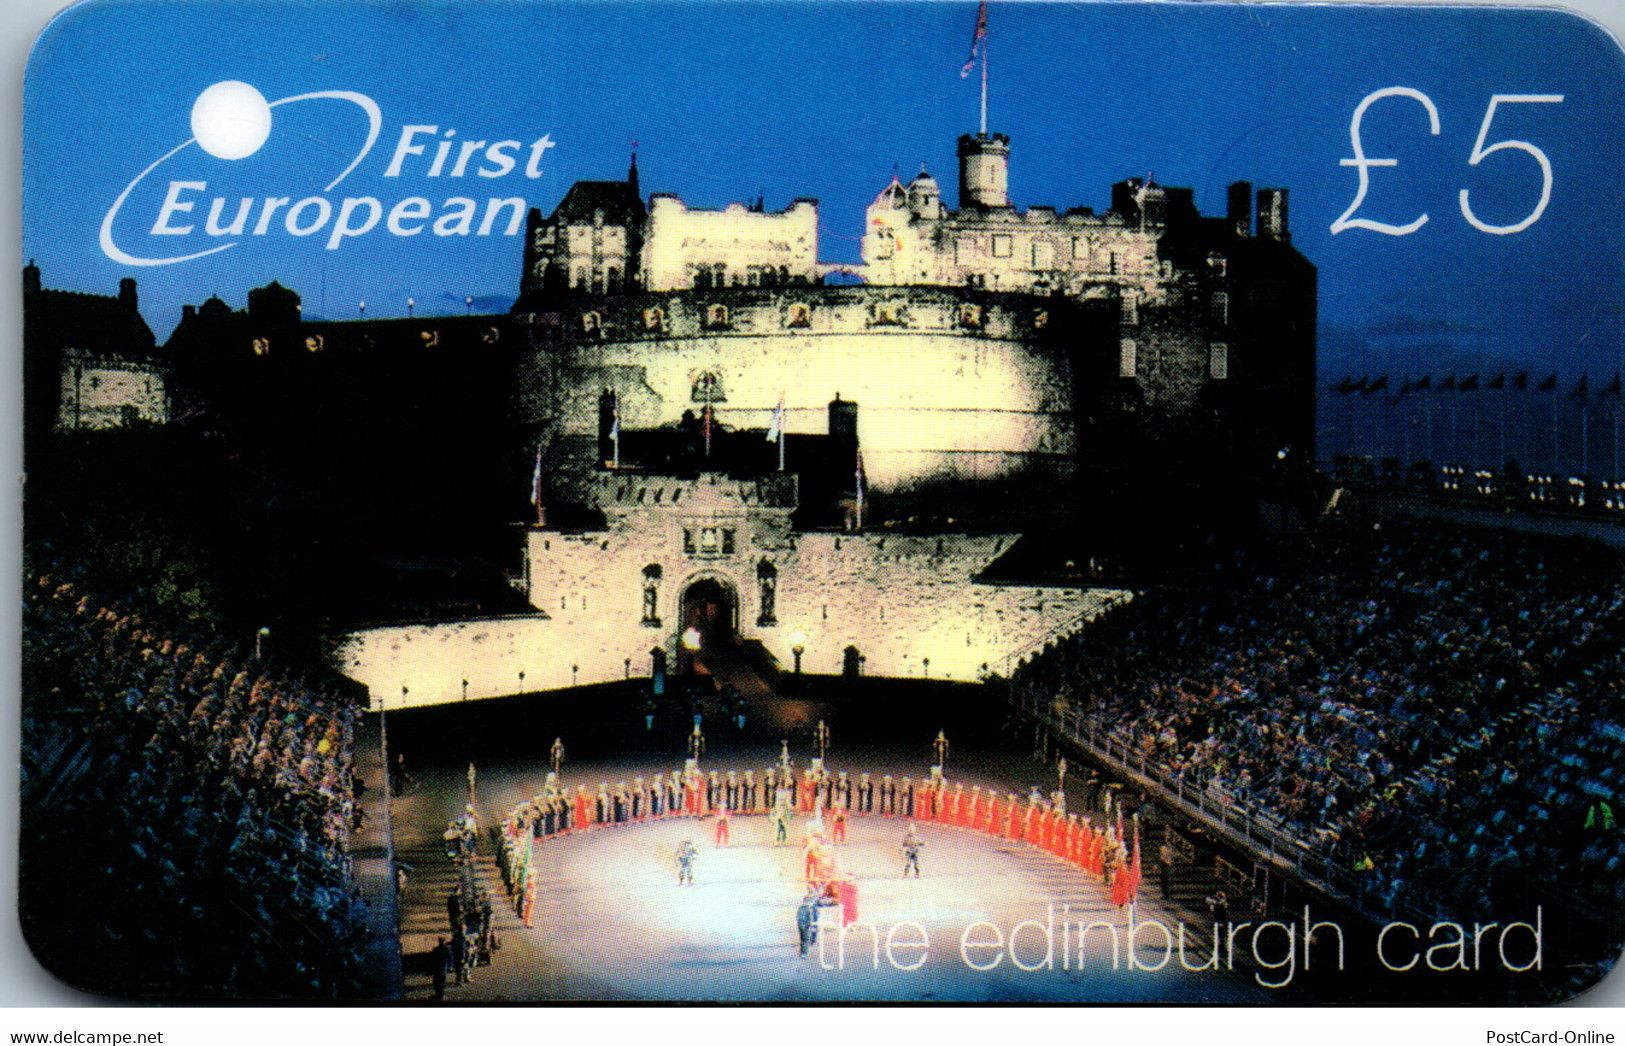 29246 - Großbritannien - First European , The Edinburgh Card , Prepaid - BT Cartes Mondiales (Prépayées)